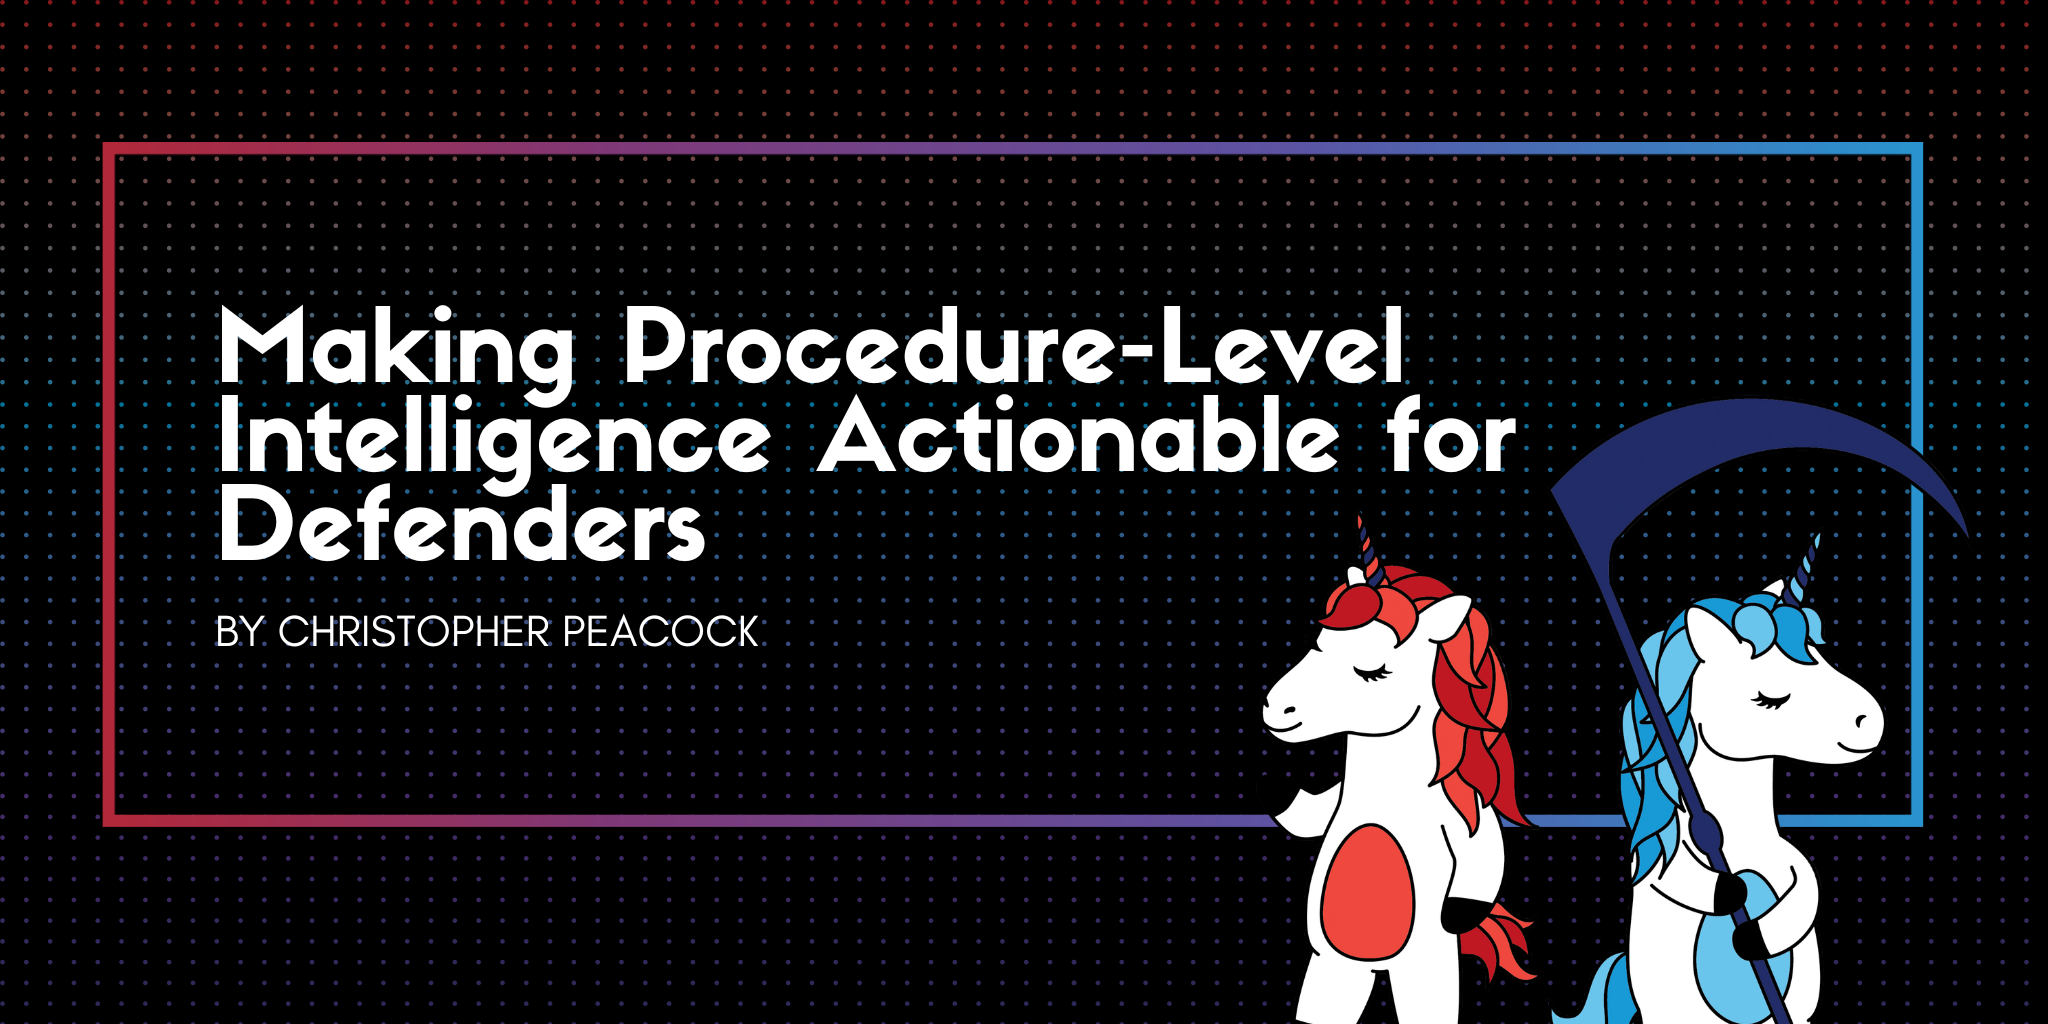 Making Procedure-Level Intelligence Actionable for Defenders